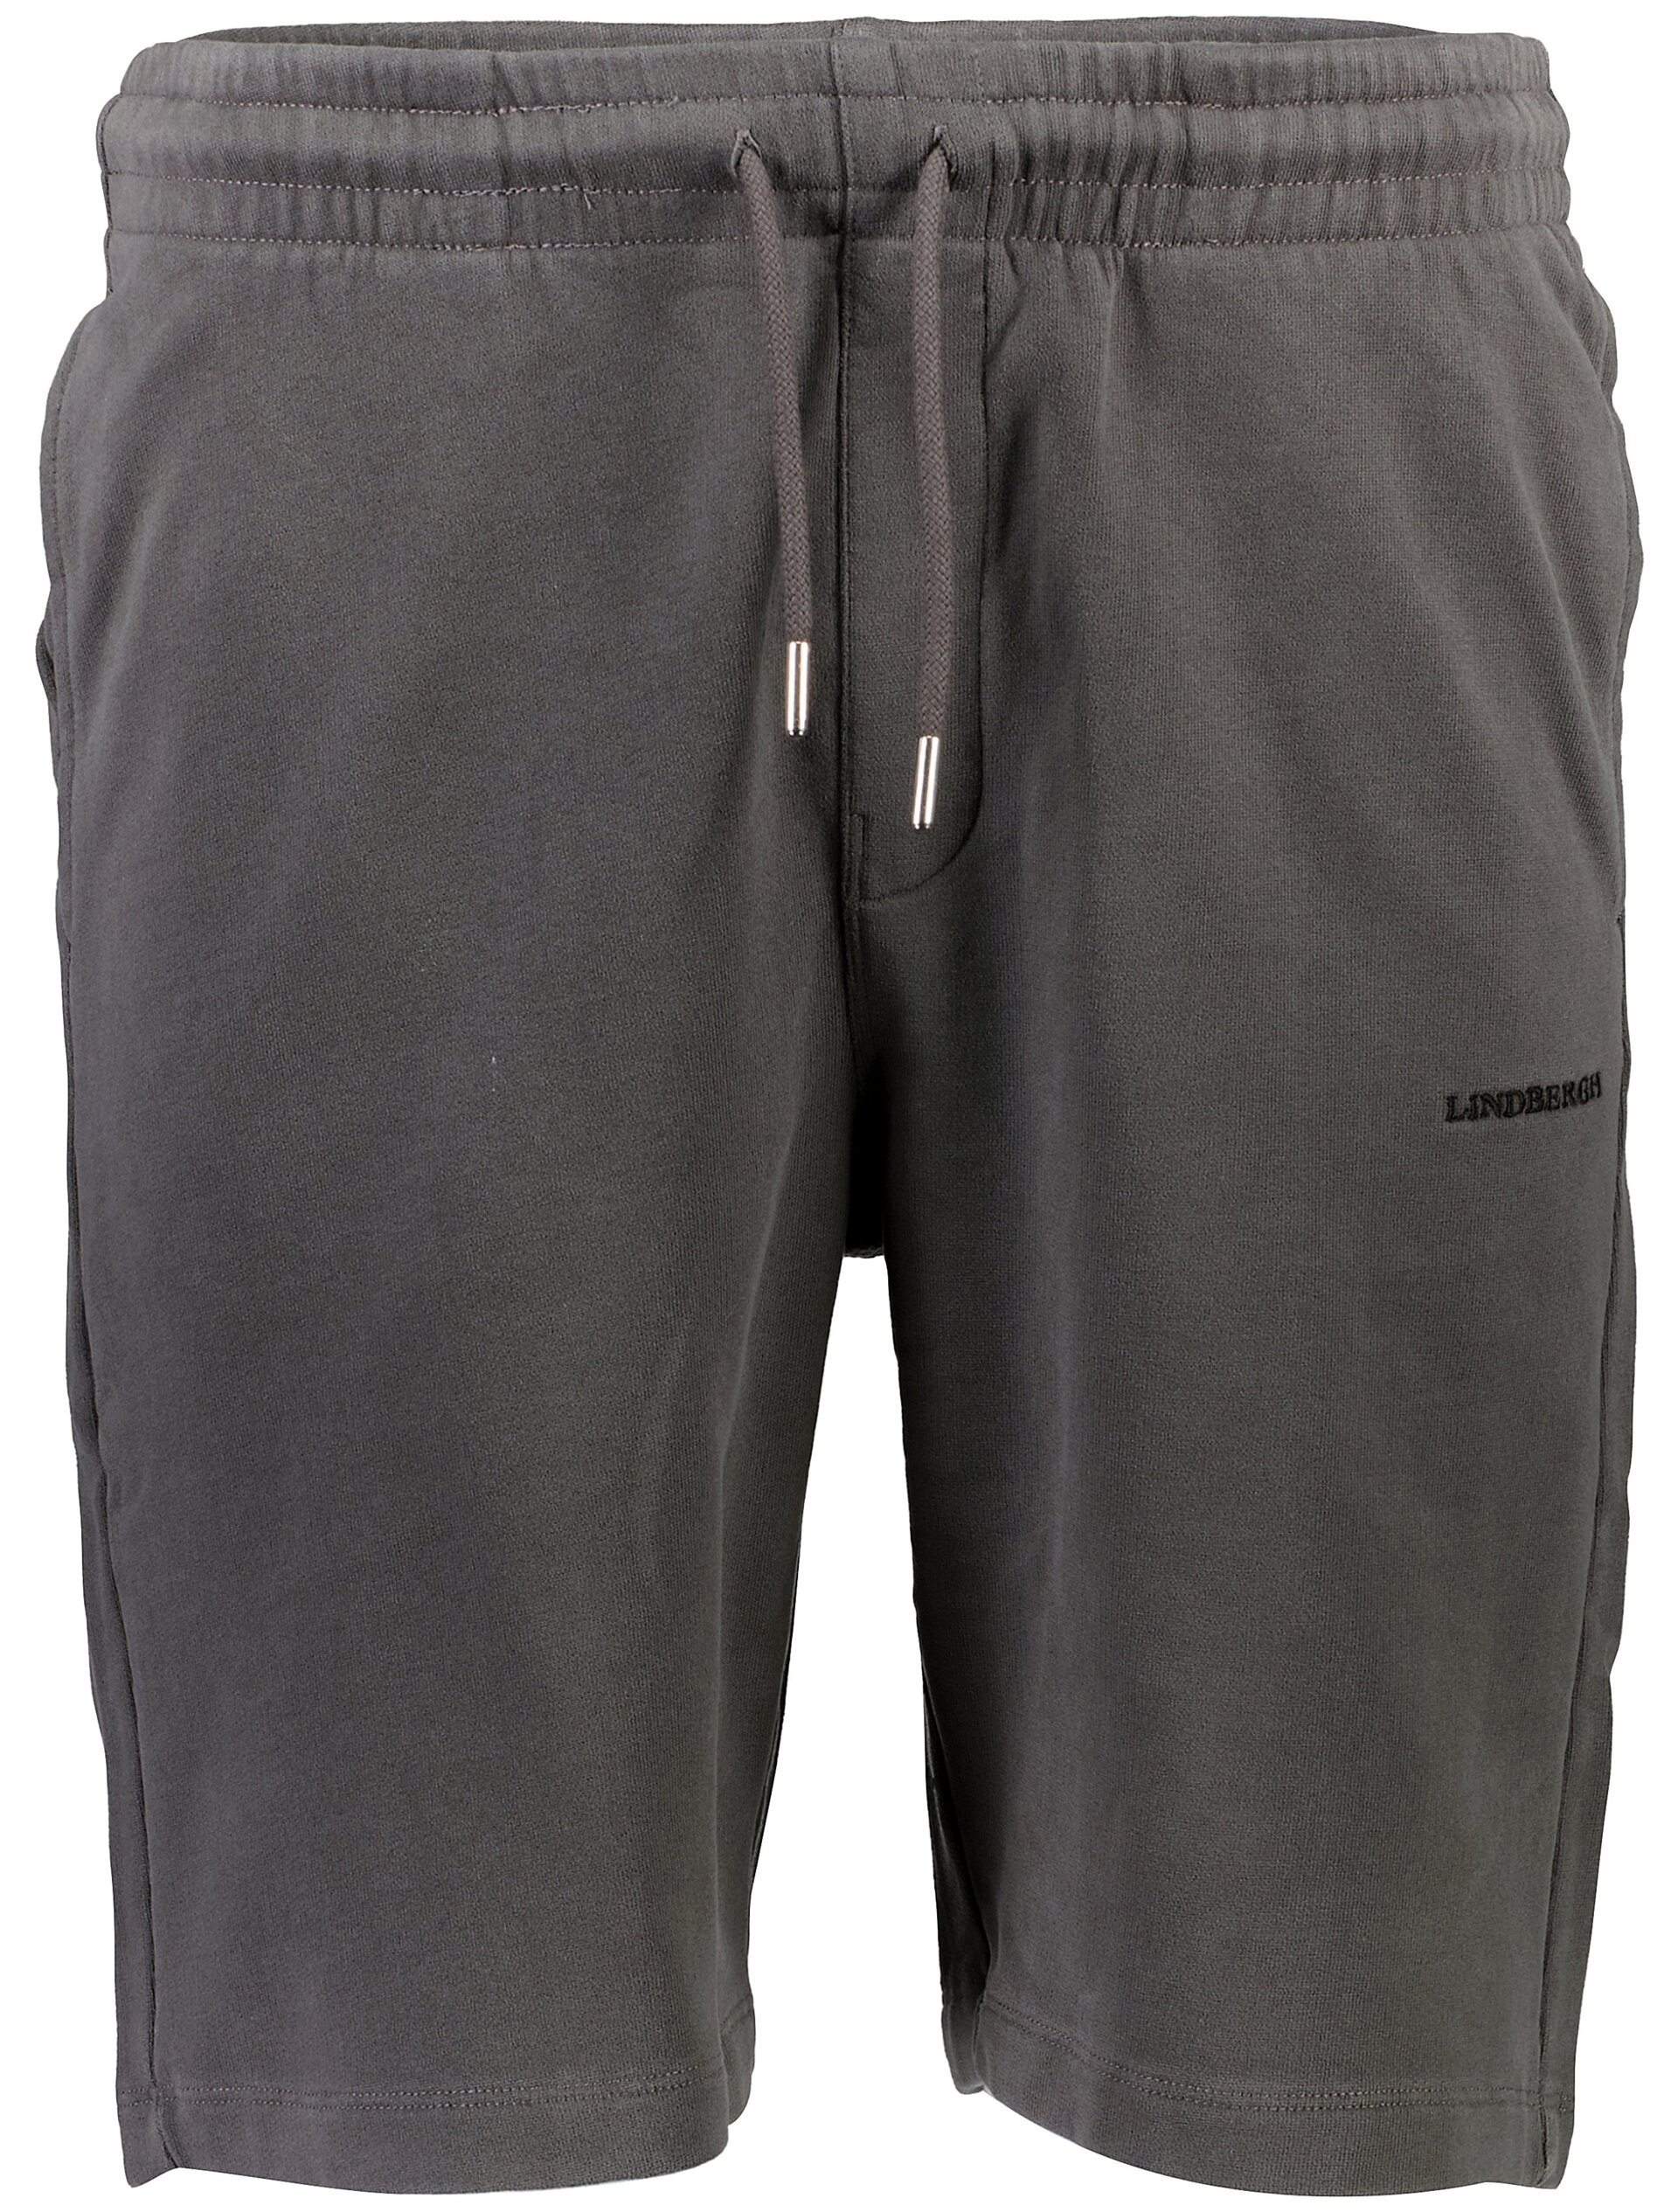 Lindbergh Casual shorts grå / charcoal